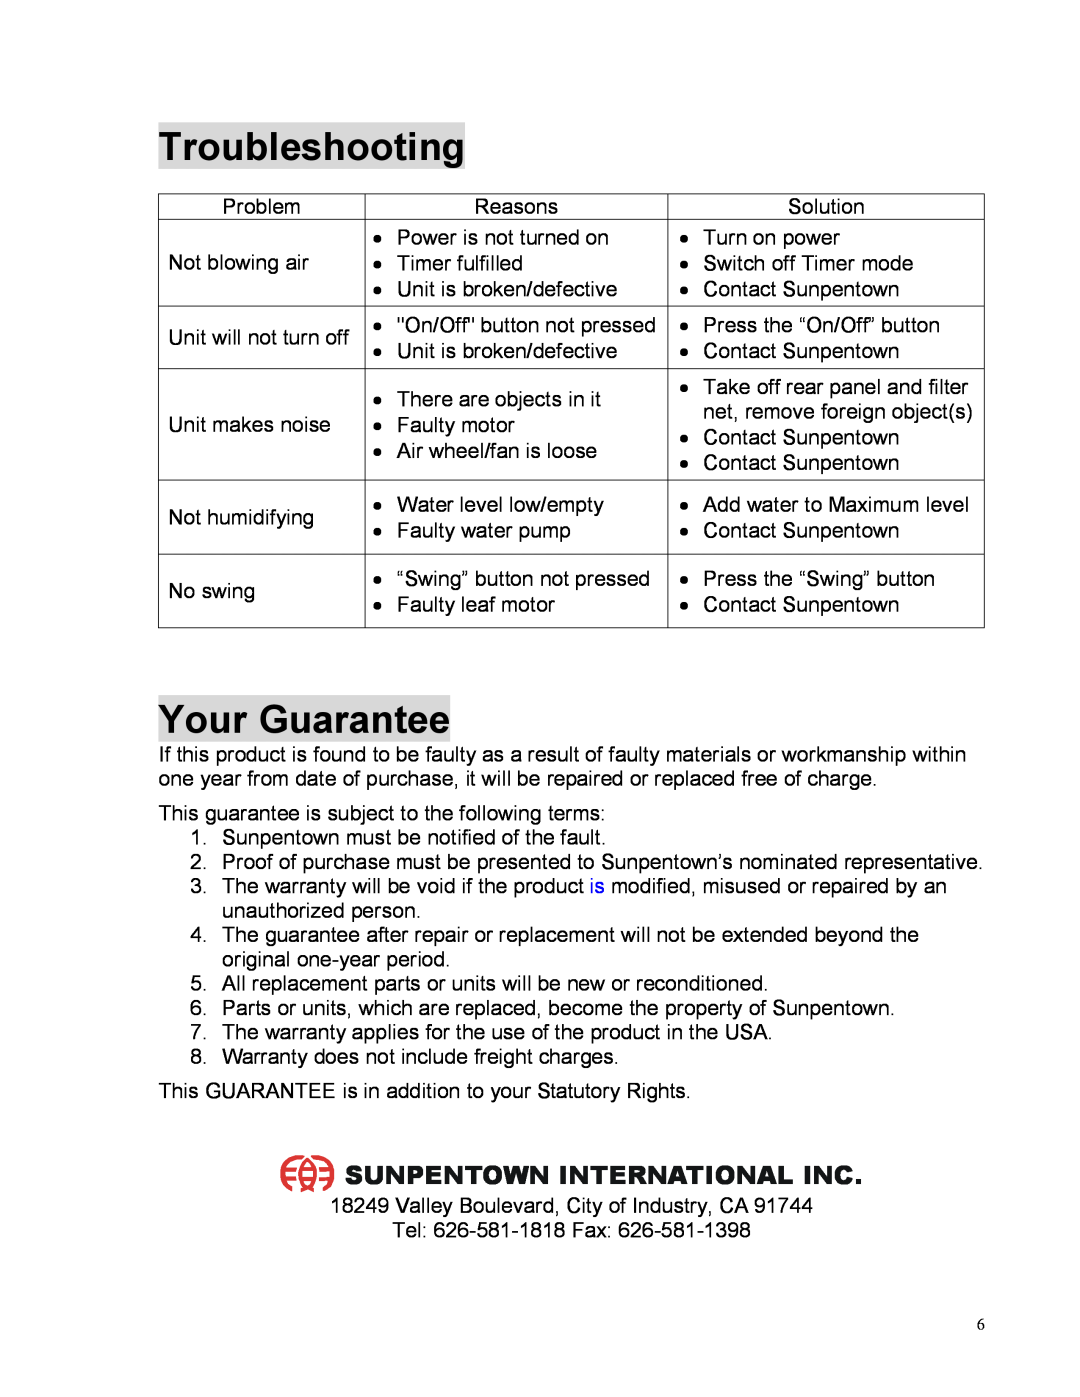 Sunpentown Intl SF-609 instruction manual Troubleshooting, Your Guarantee, Sunpentown International Inc 